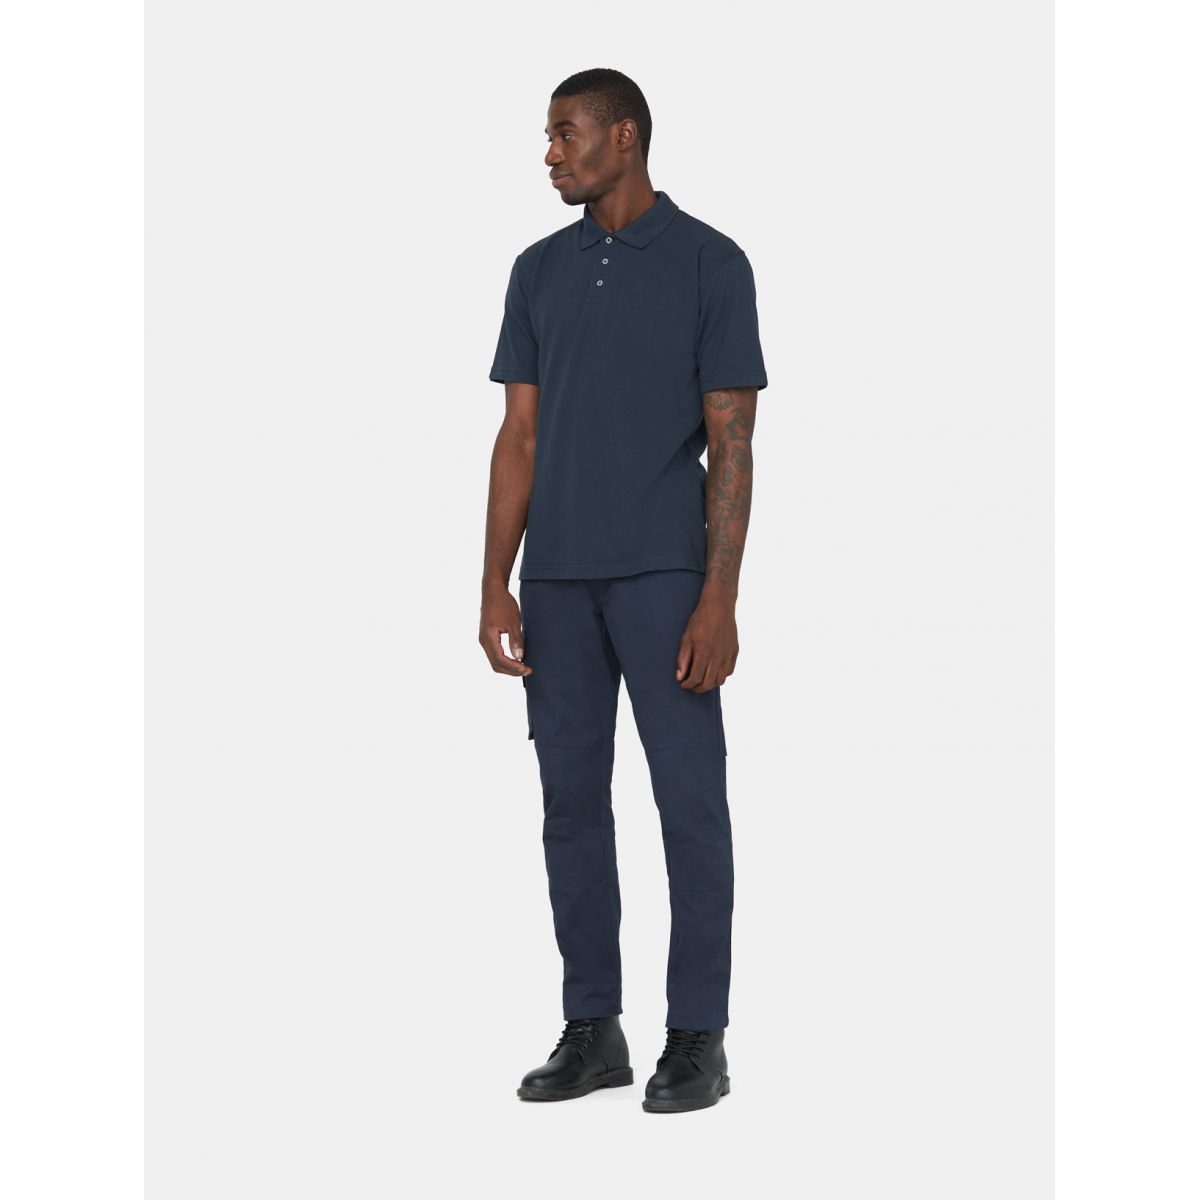 Pantalon Lead In Flex Bleu marine - Dickies - Taille 38 4